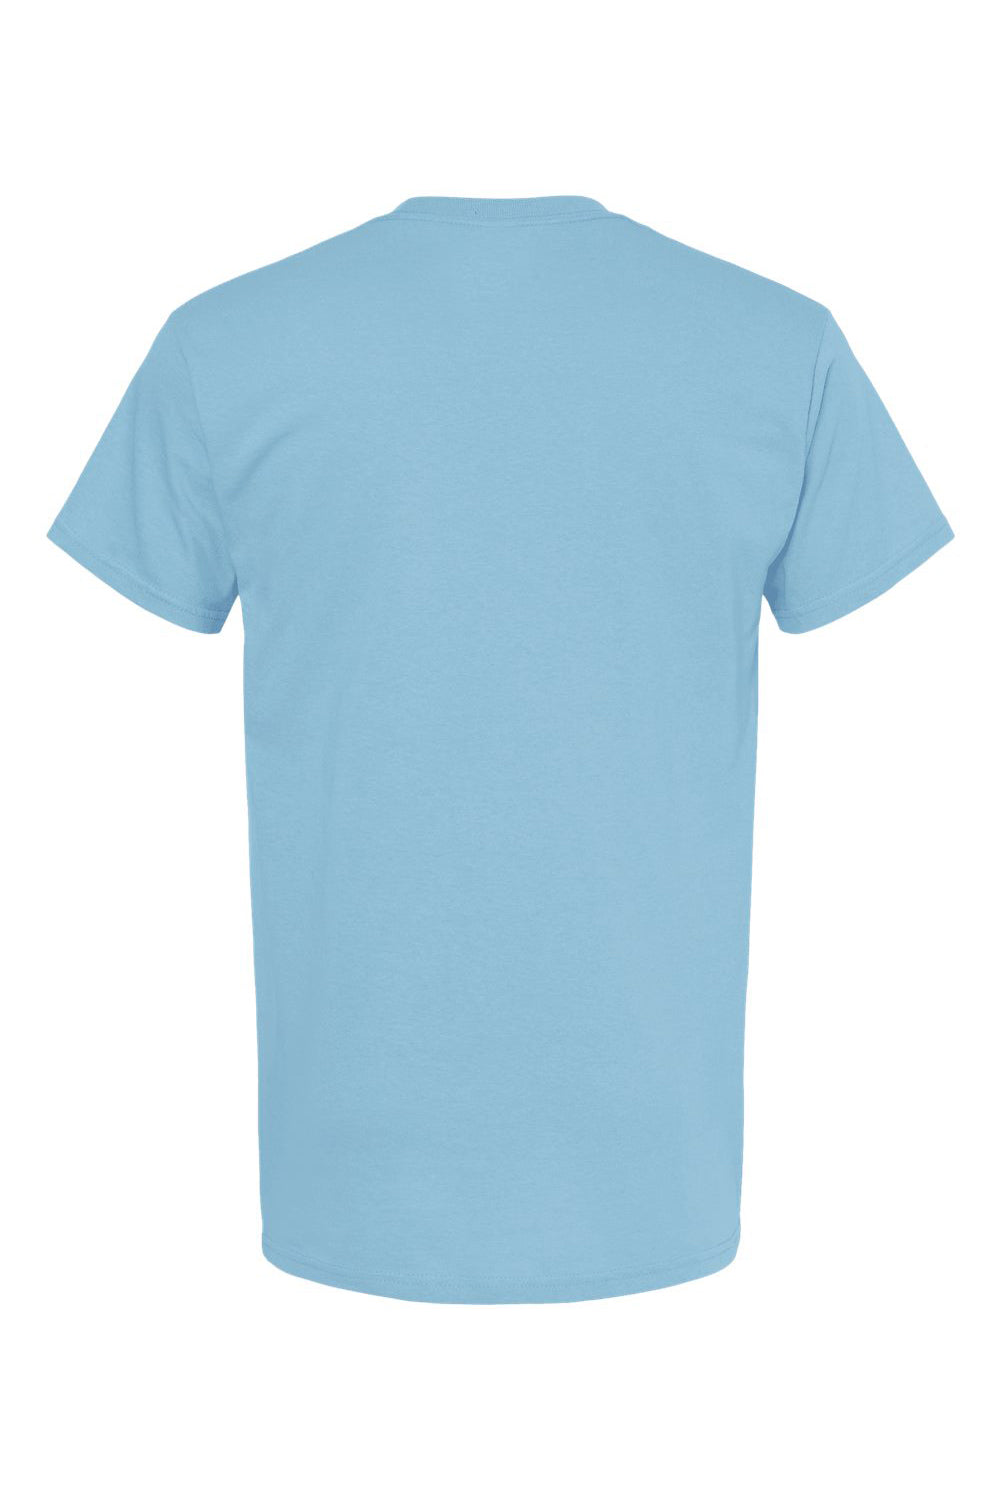 M&O 4800 Mens Gold Soft Touch Short Sleeve Crewneck T-Shirt Light Blue Flat Back